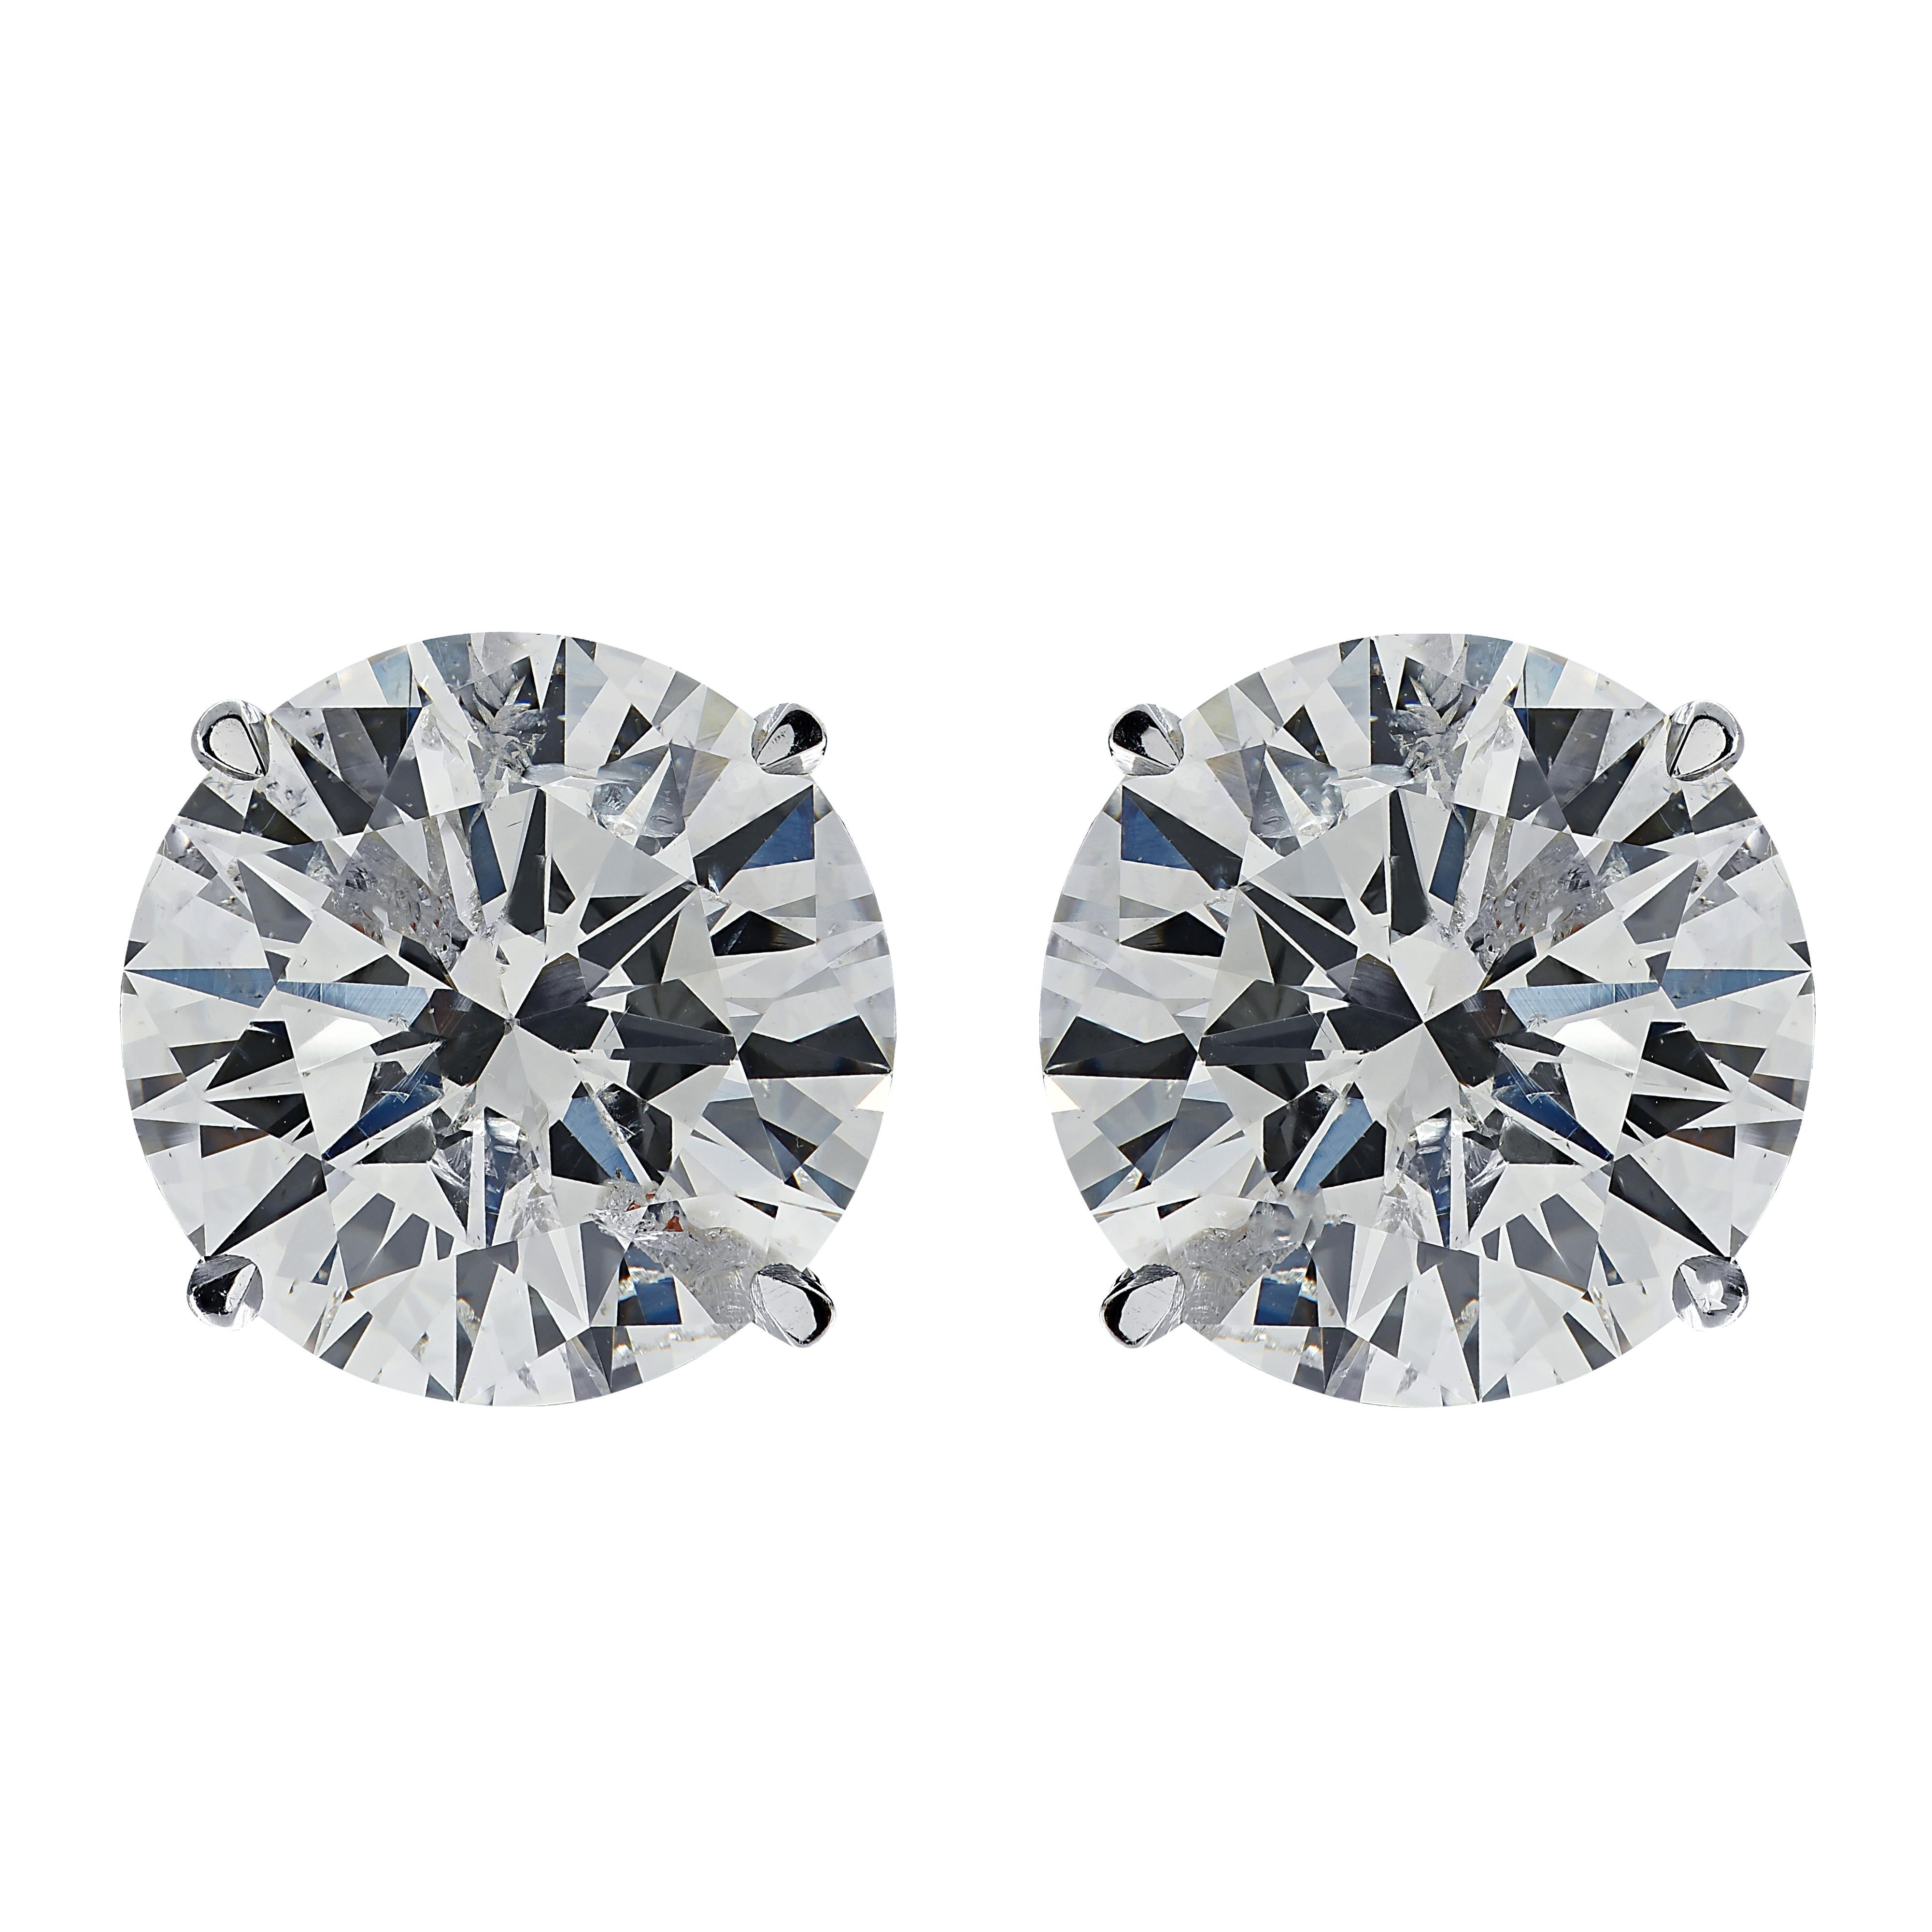 Round Cut Vivid Diamonds 4.04 Carat Diamond Solitaire Stud Earrings